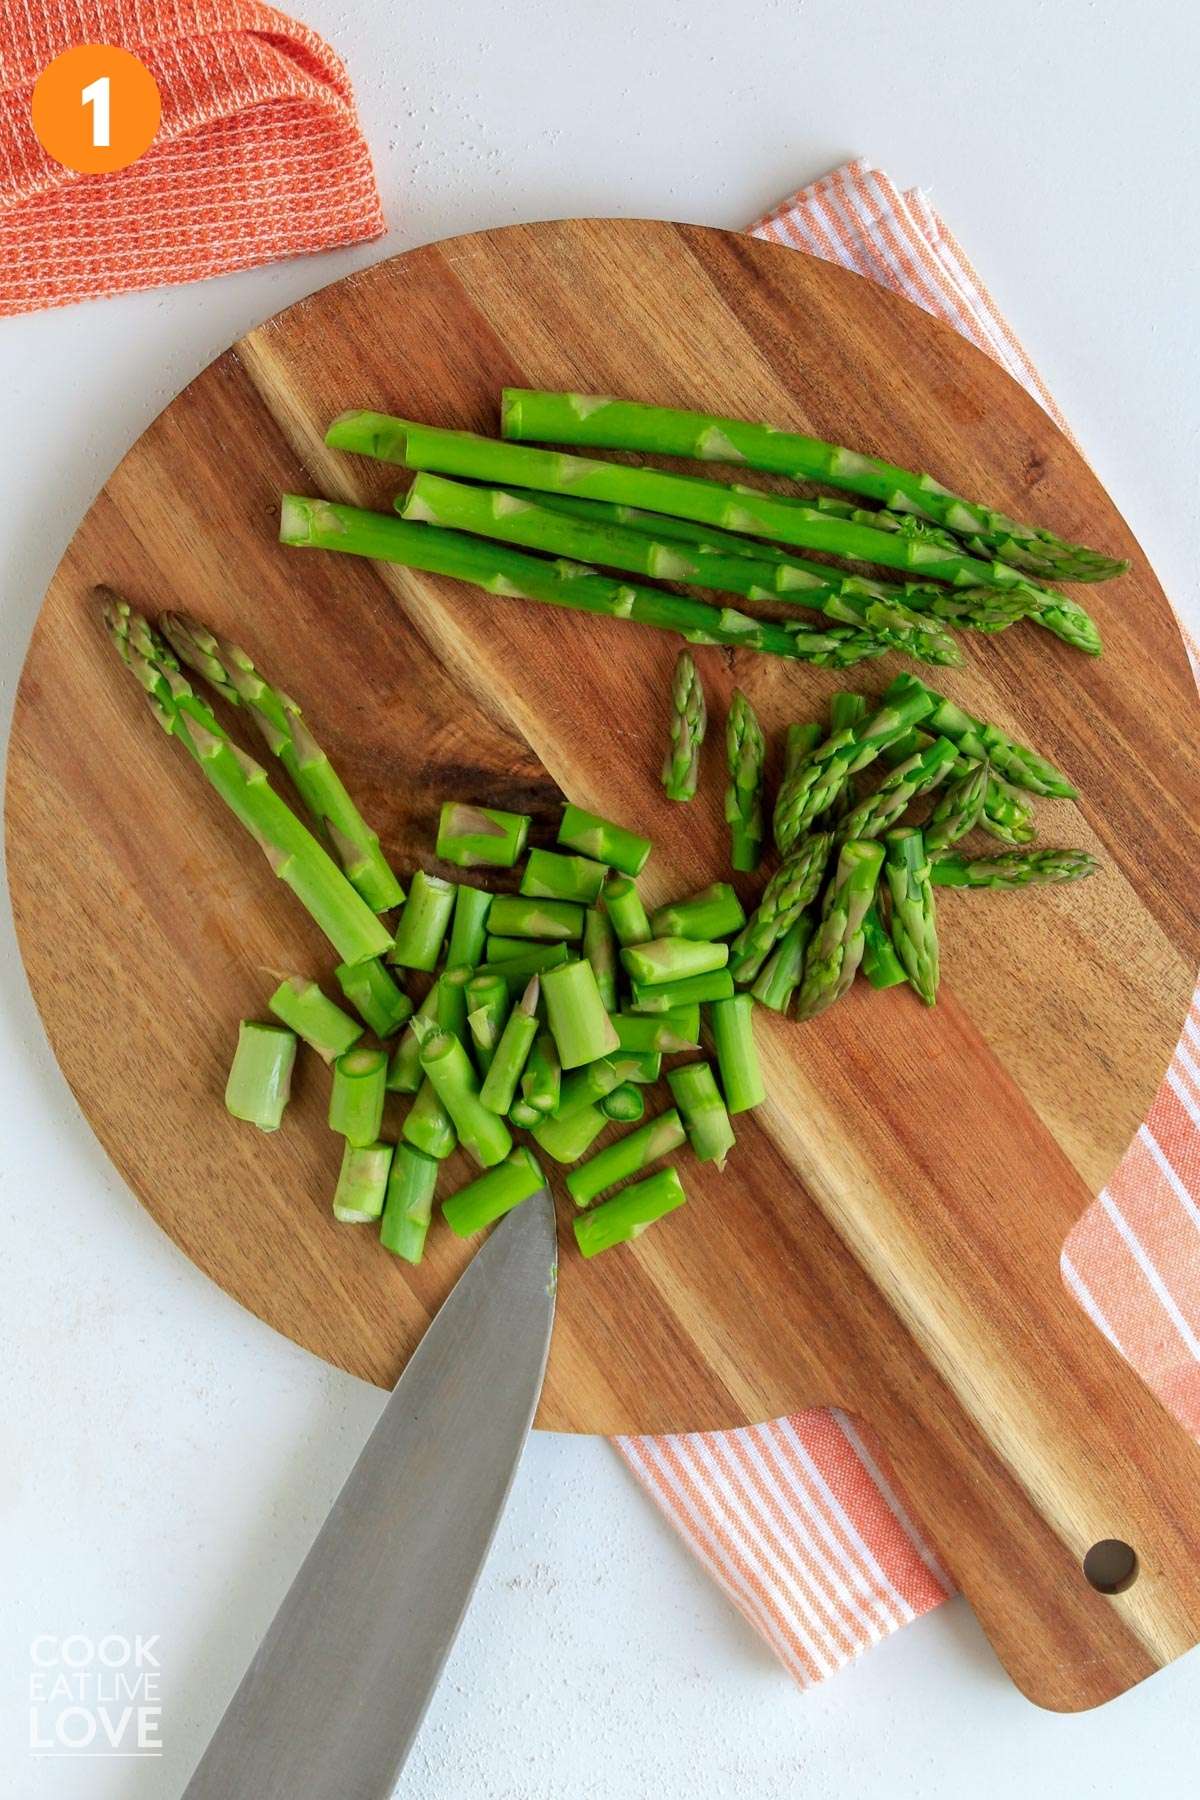 Cut asparagus on a cutting board with knife.